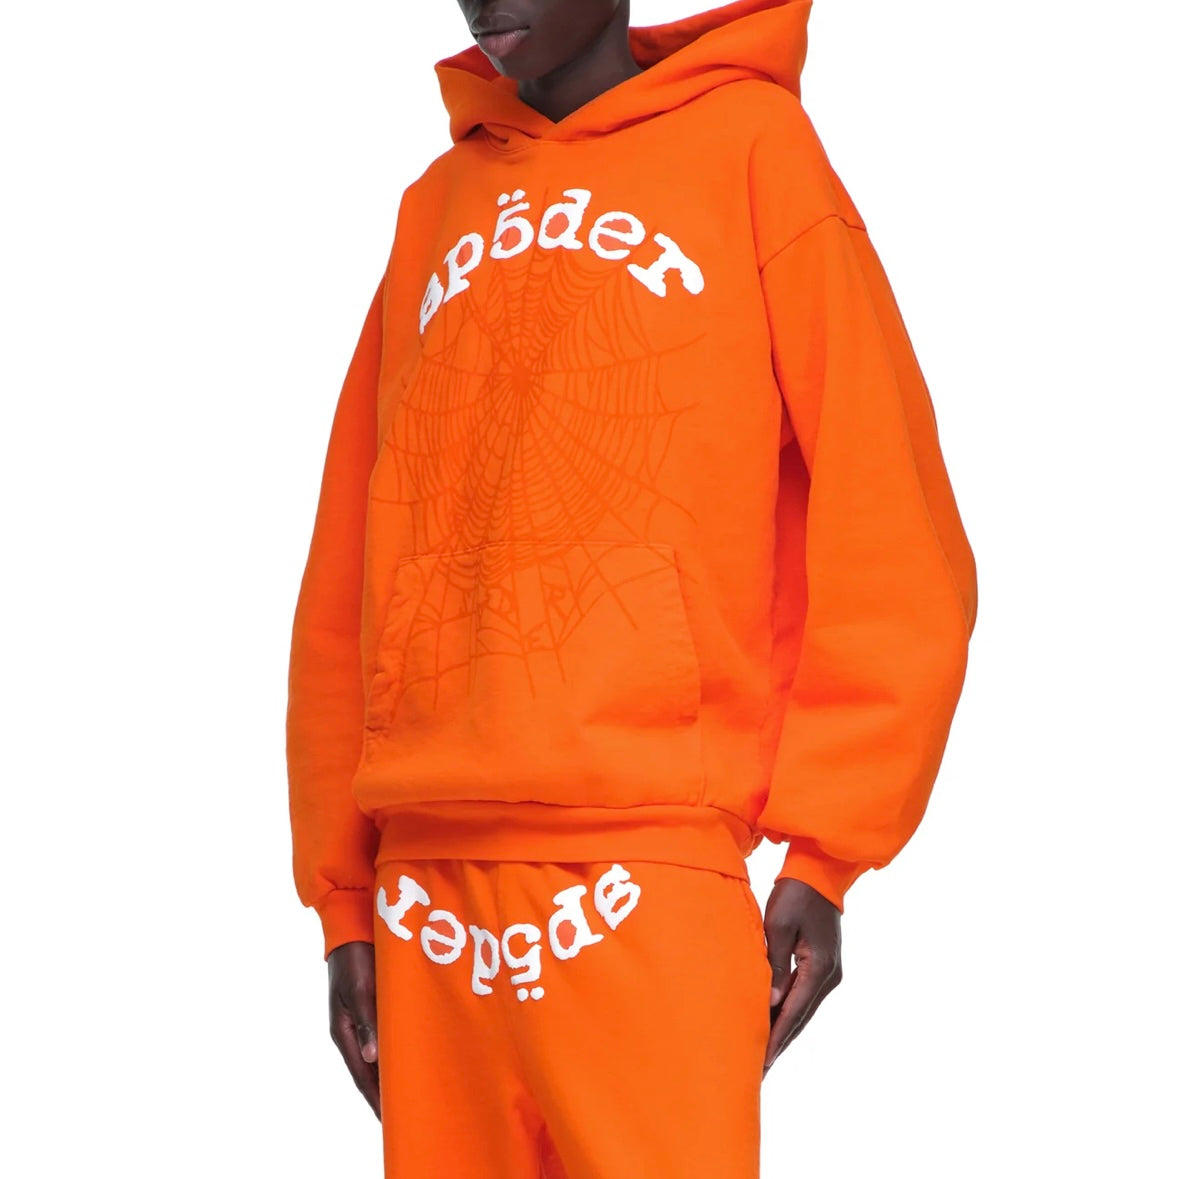 Sp5der Orange White Legacy Hoodie On Body Front Left Male